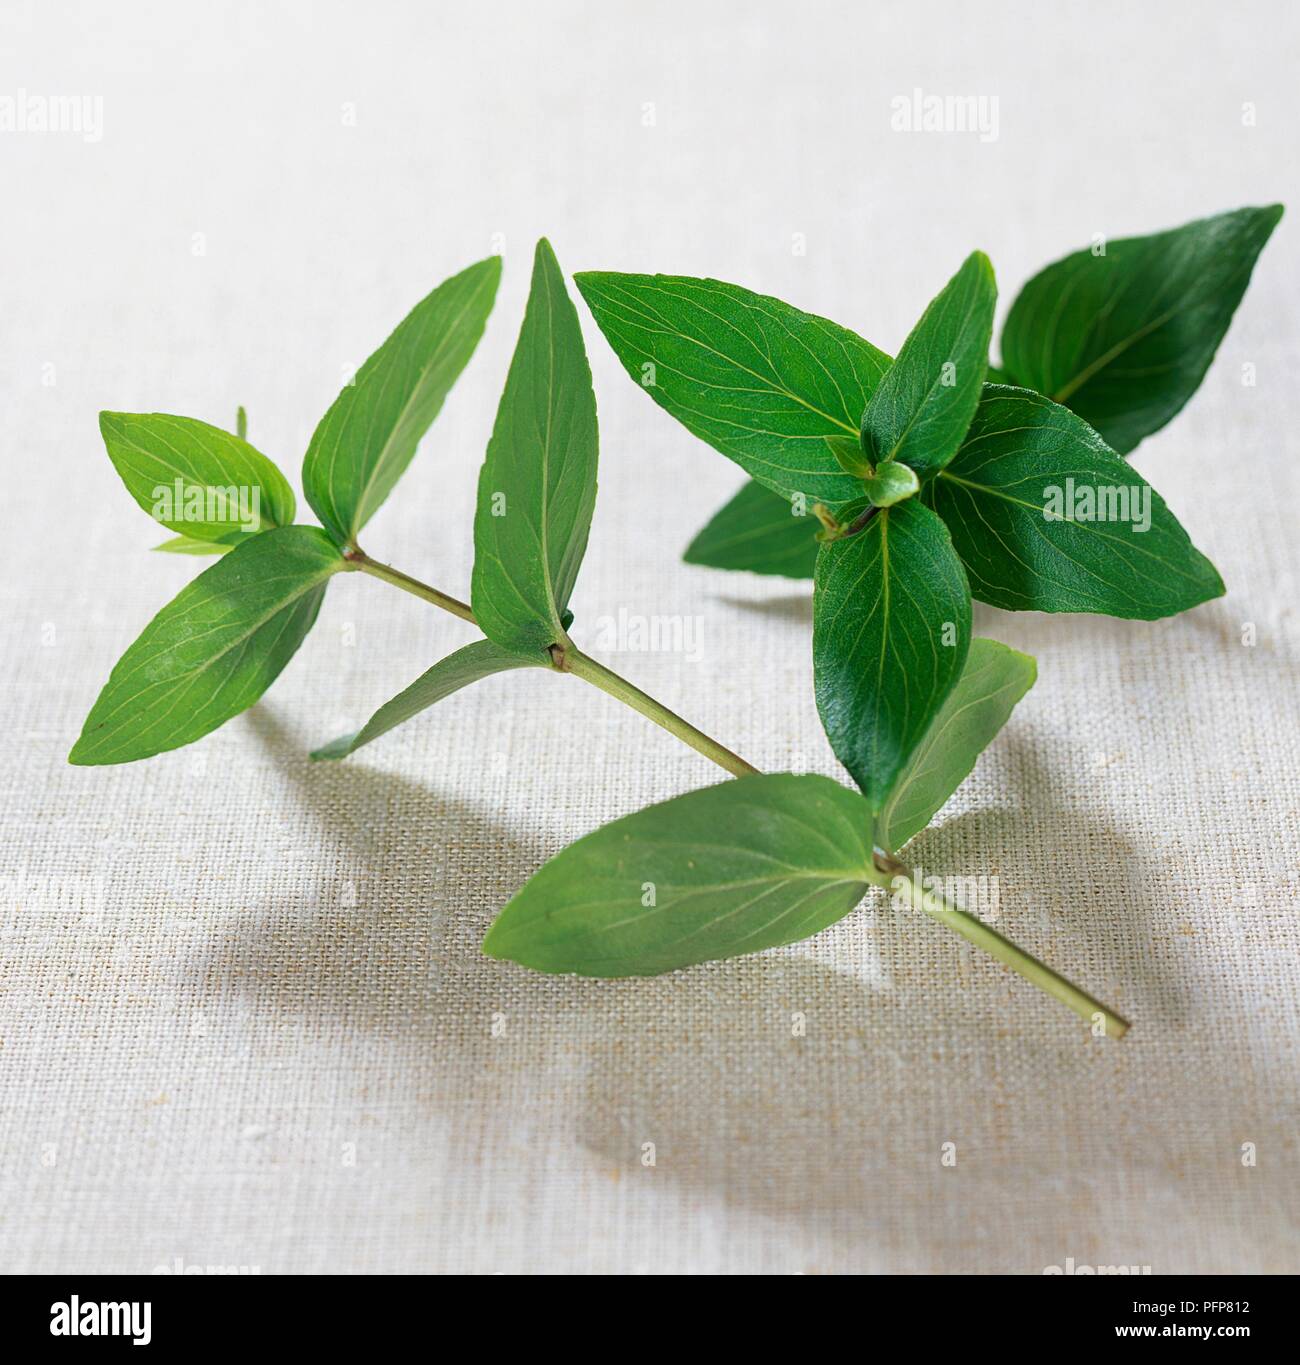 Mountain mint (Pycnanthemum pilosa), fresh sprigs of green, pinnate leaves Stock Photo